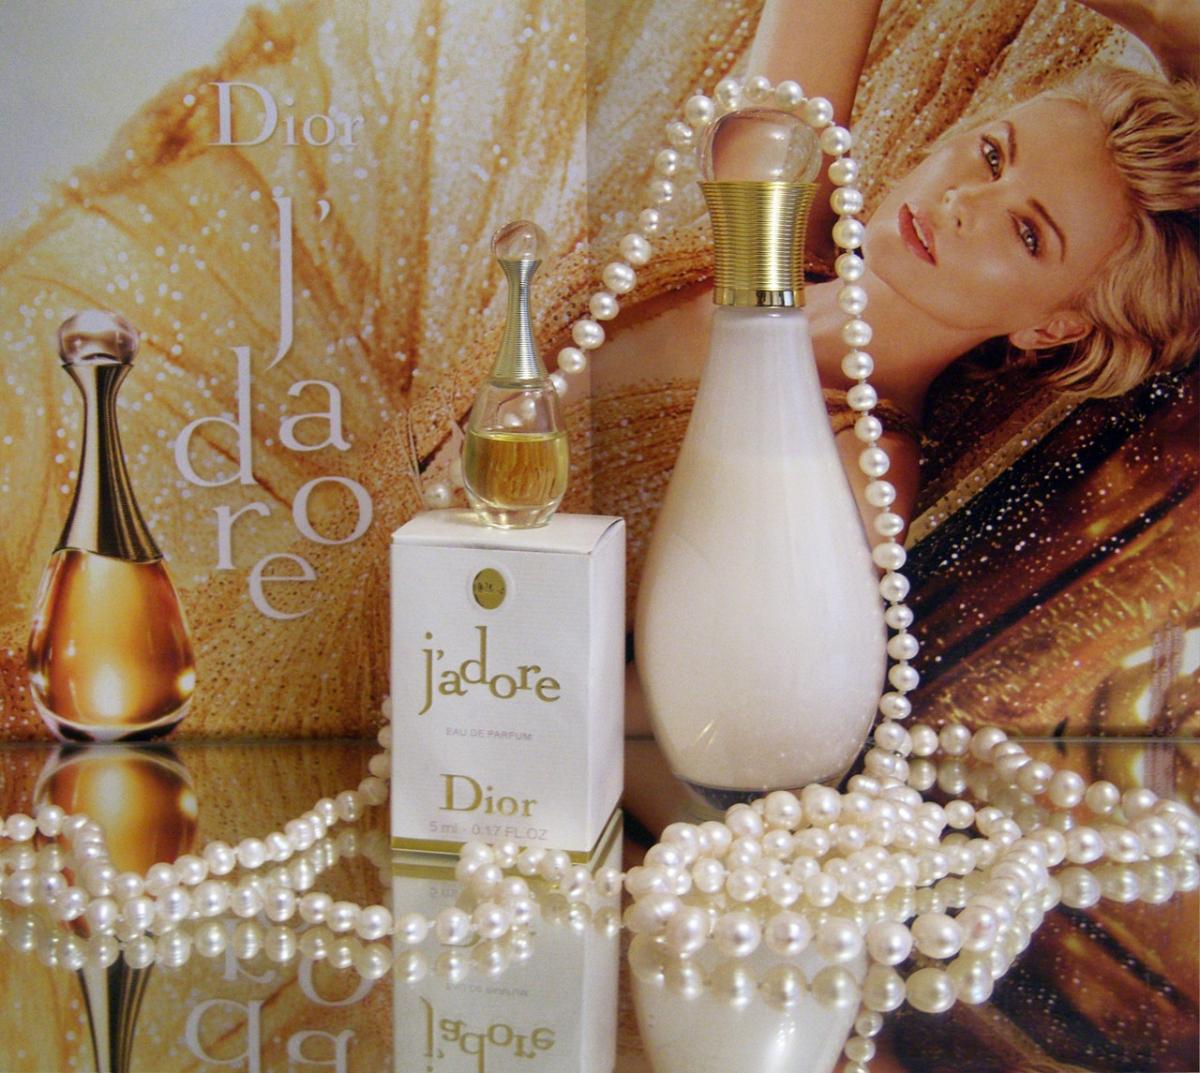 J'adore Christian Dior perfume - a fragrance for women 1999